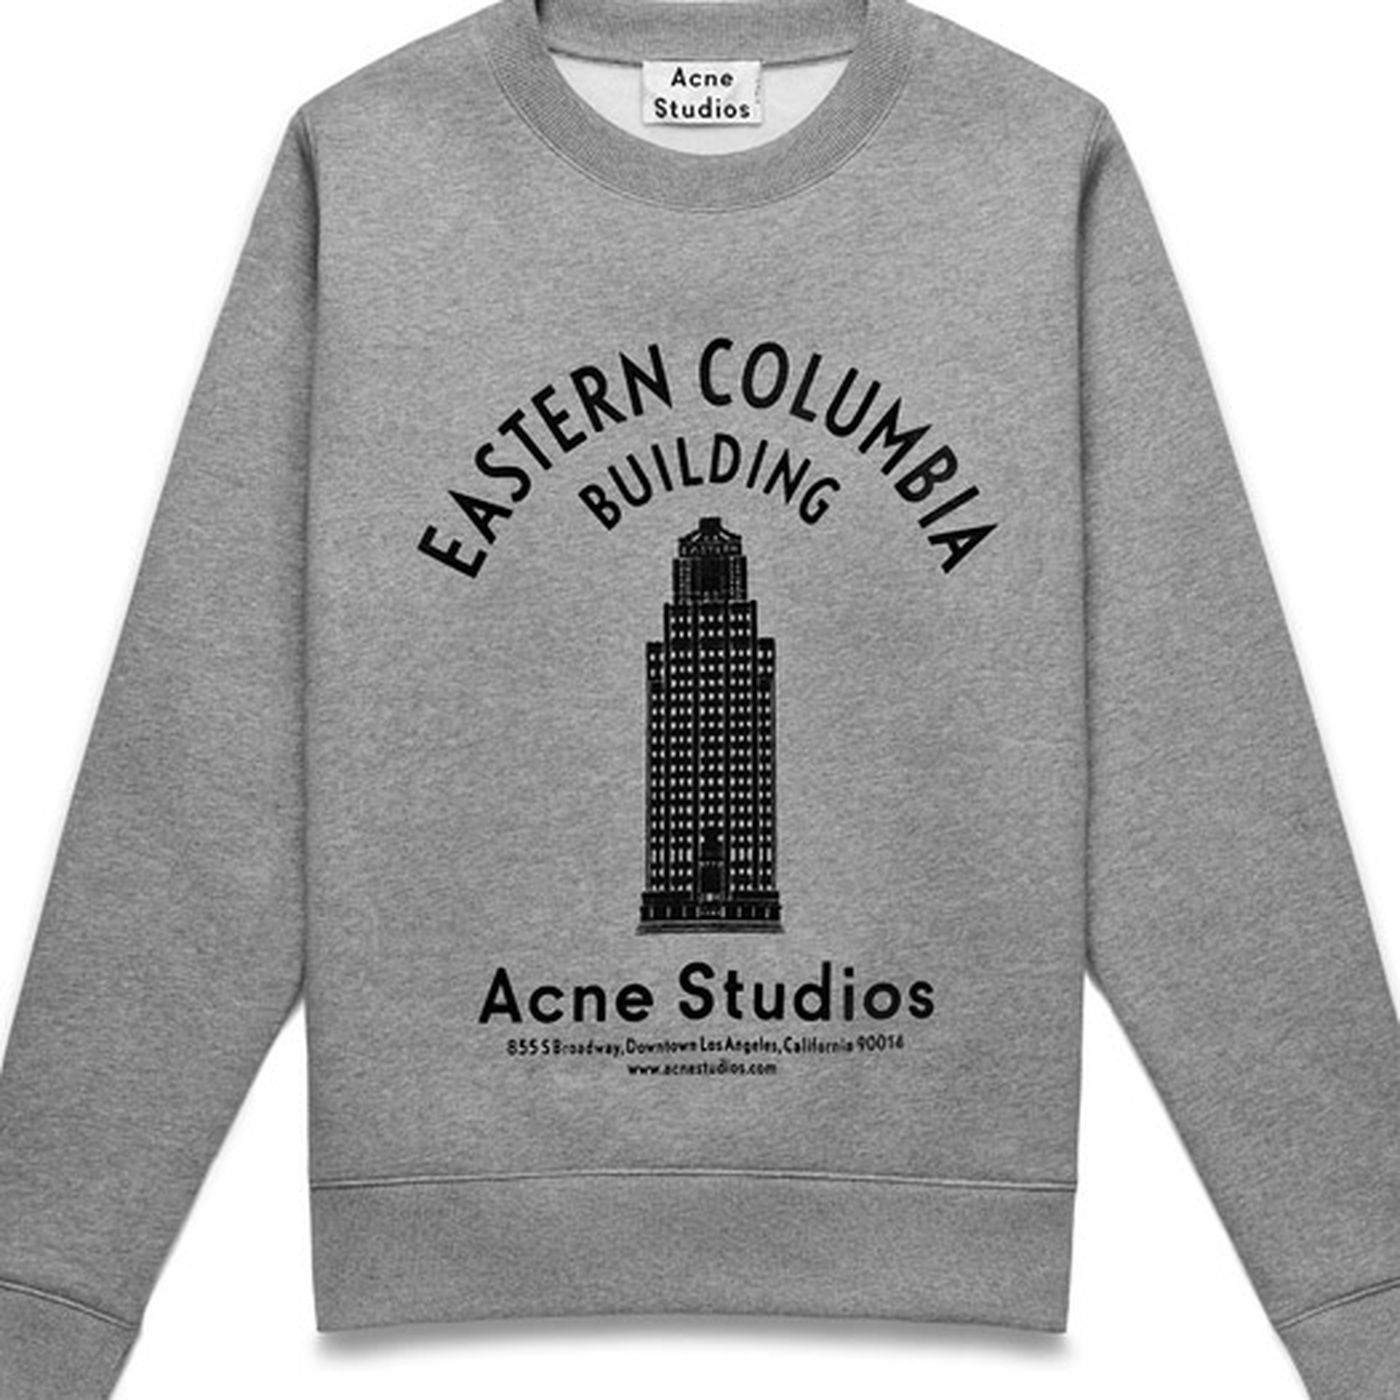 Acne Studios Limited-Edition DTLA Birthday Sweater Racked